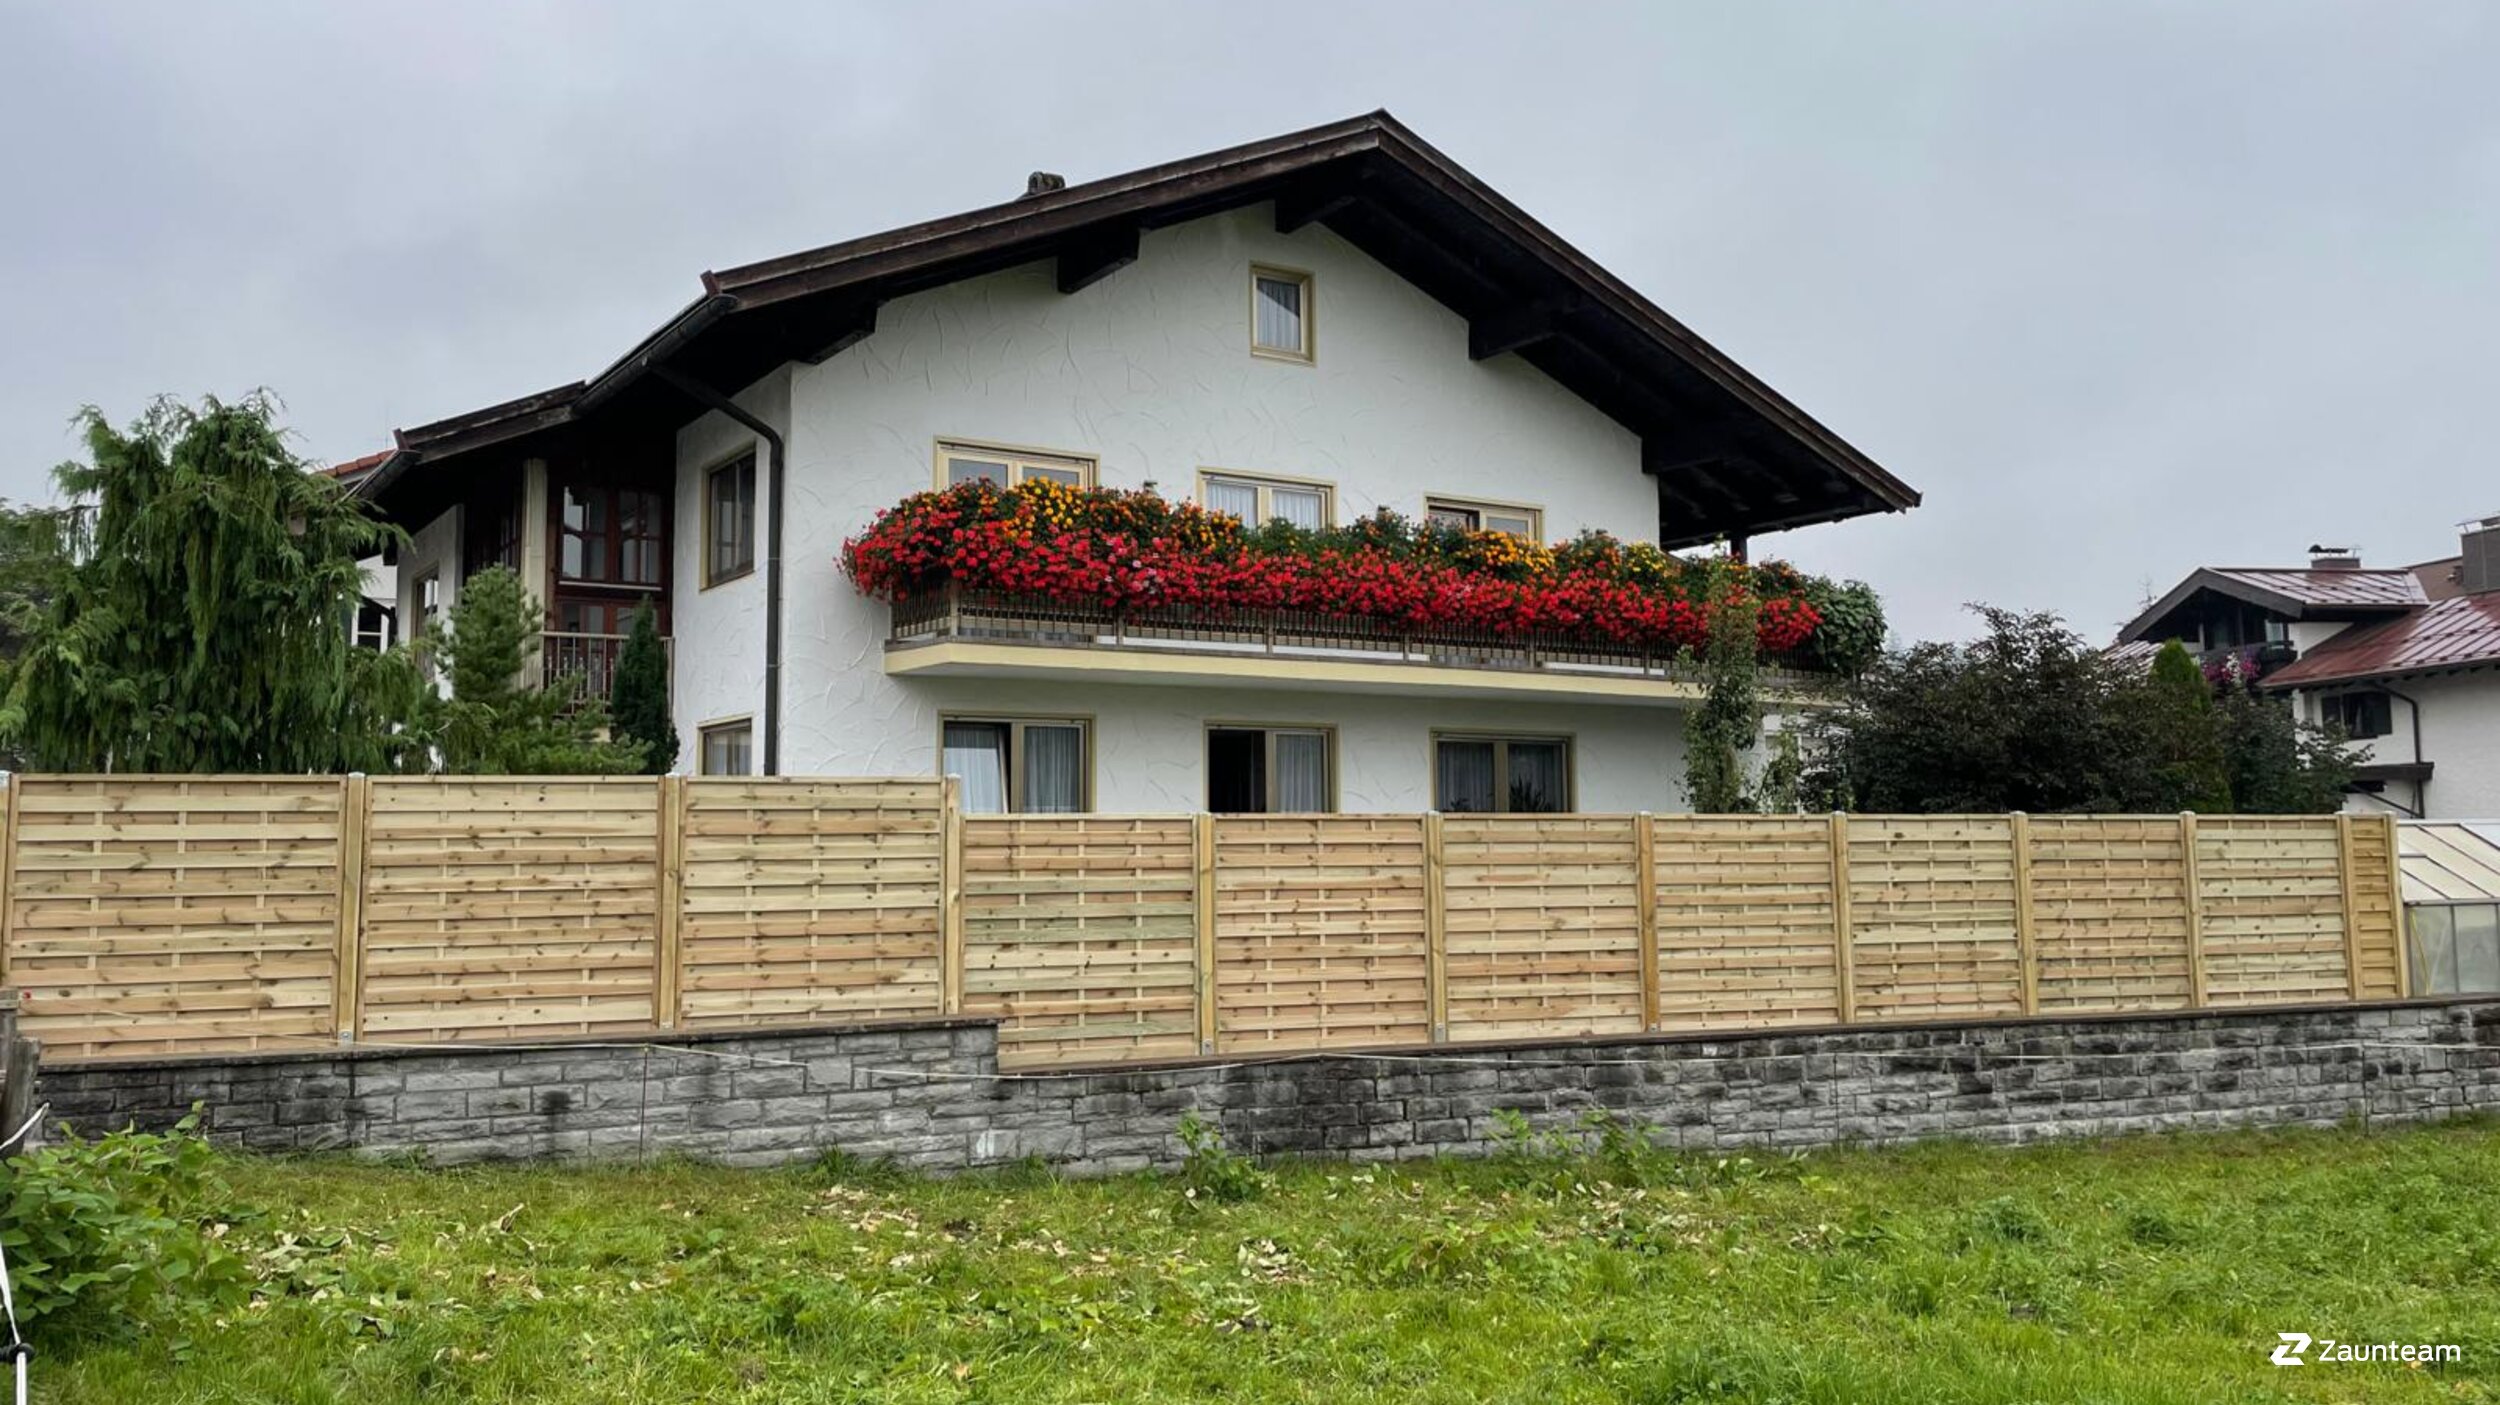 Protection brise-vue en bois de 2022 à 87561 Oberstdorf Allemagne de Zaunteam Allgäu.